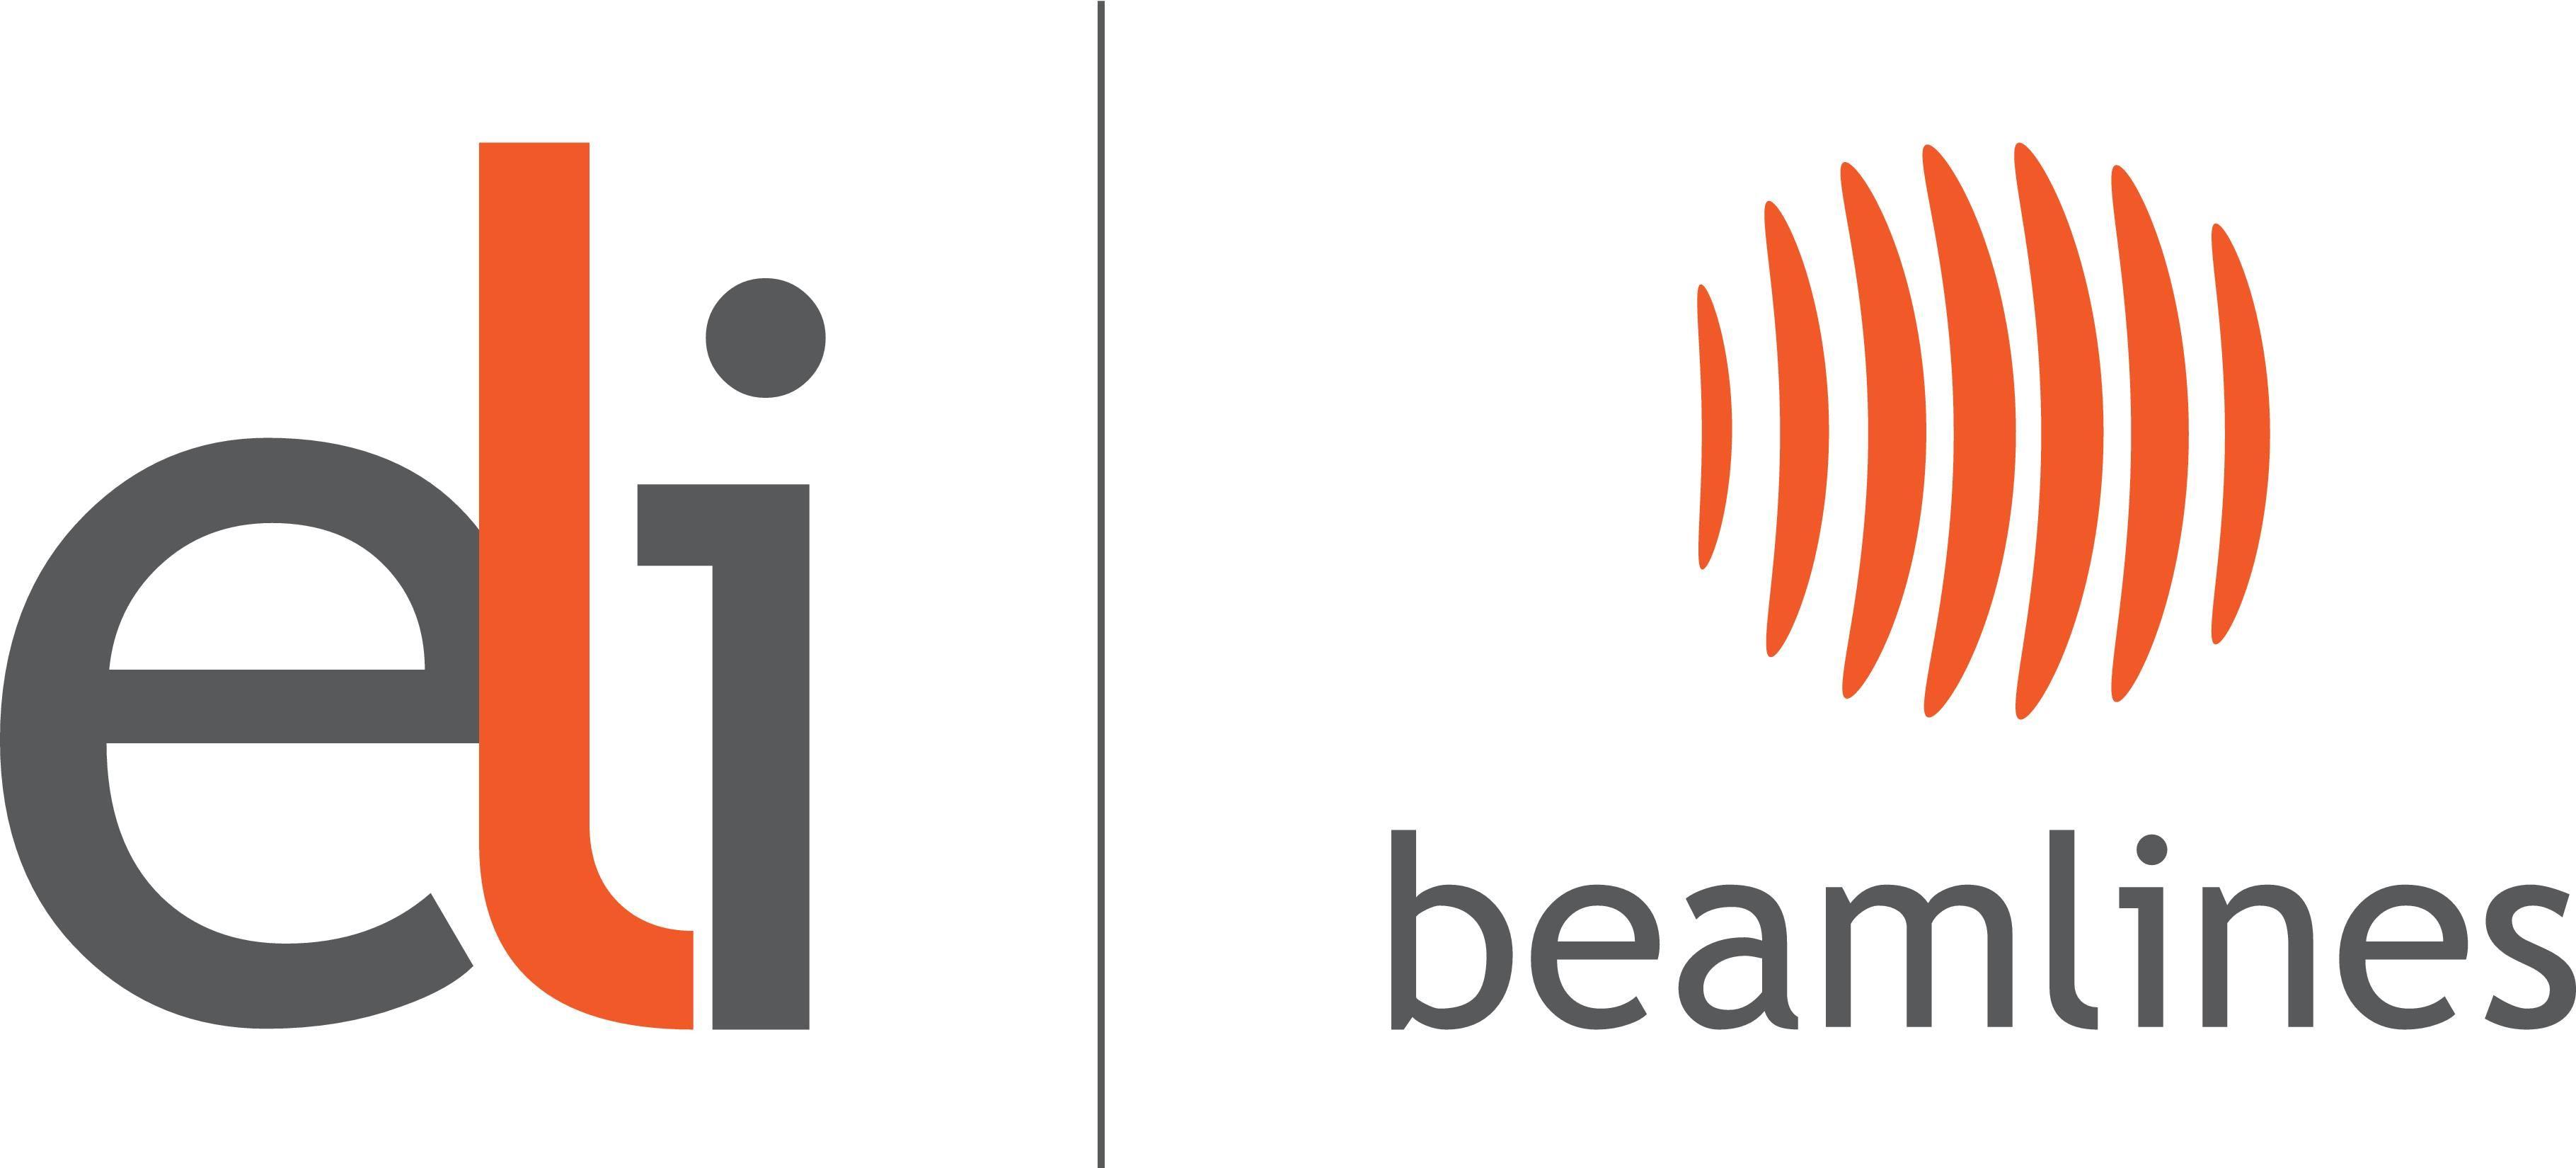 Eli Logo - ELI - Research & Development in the Czech Republic